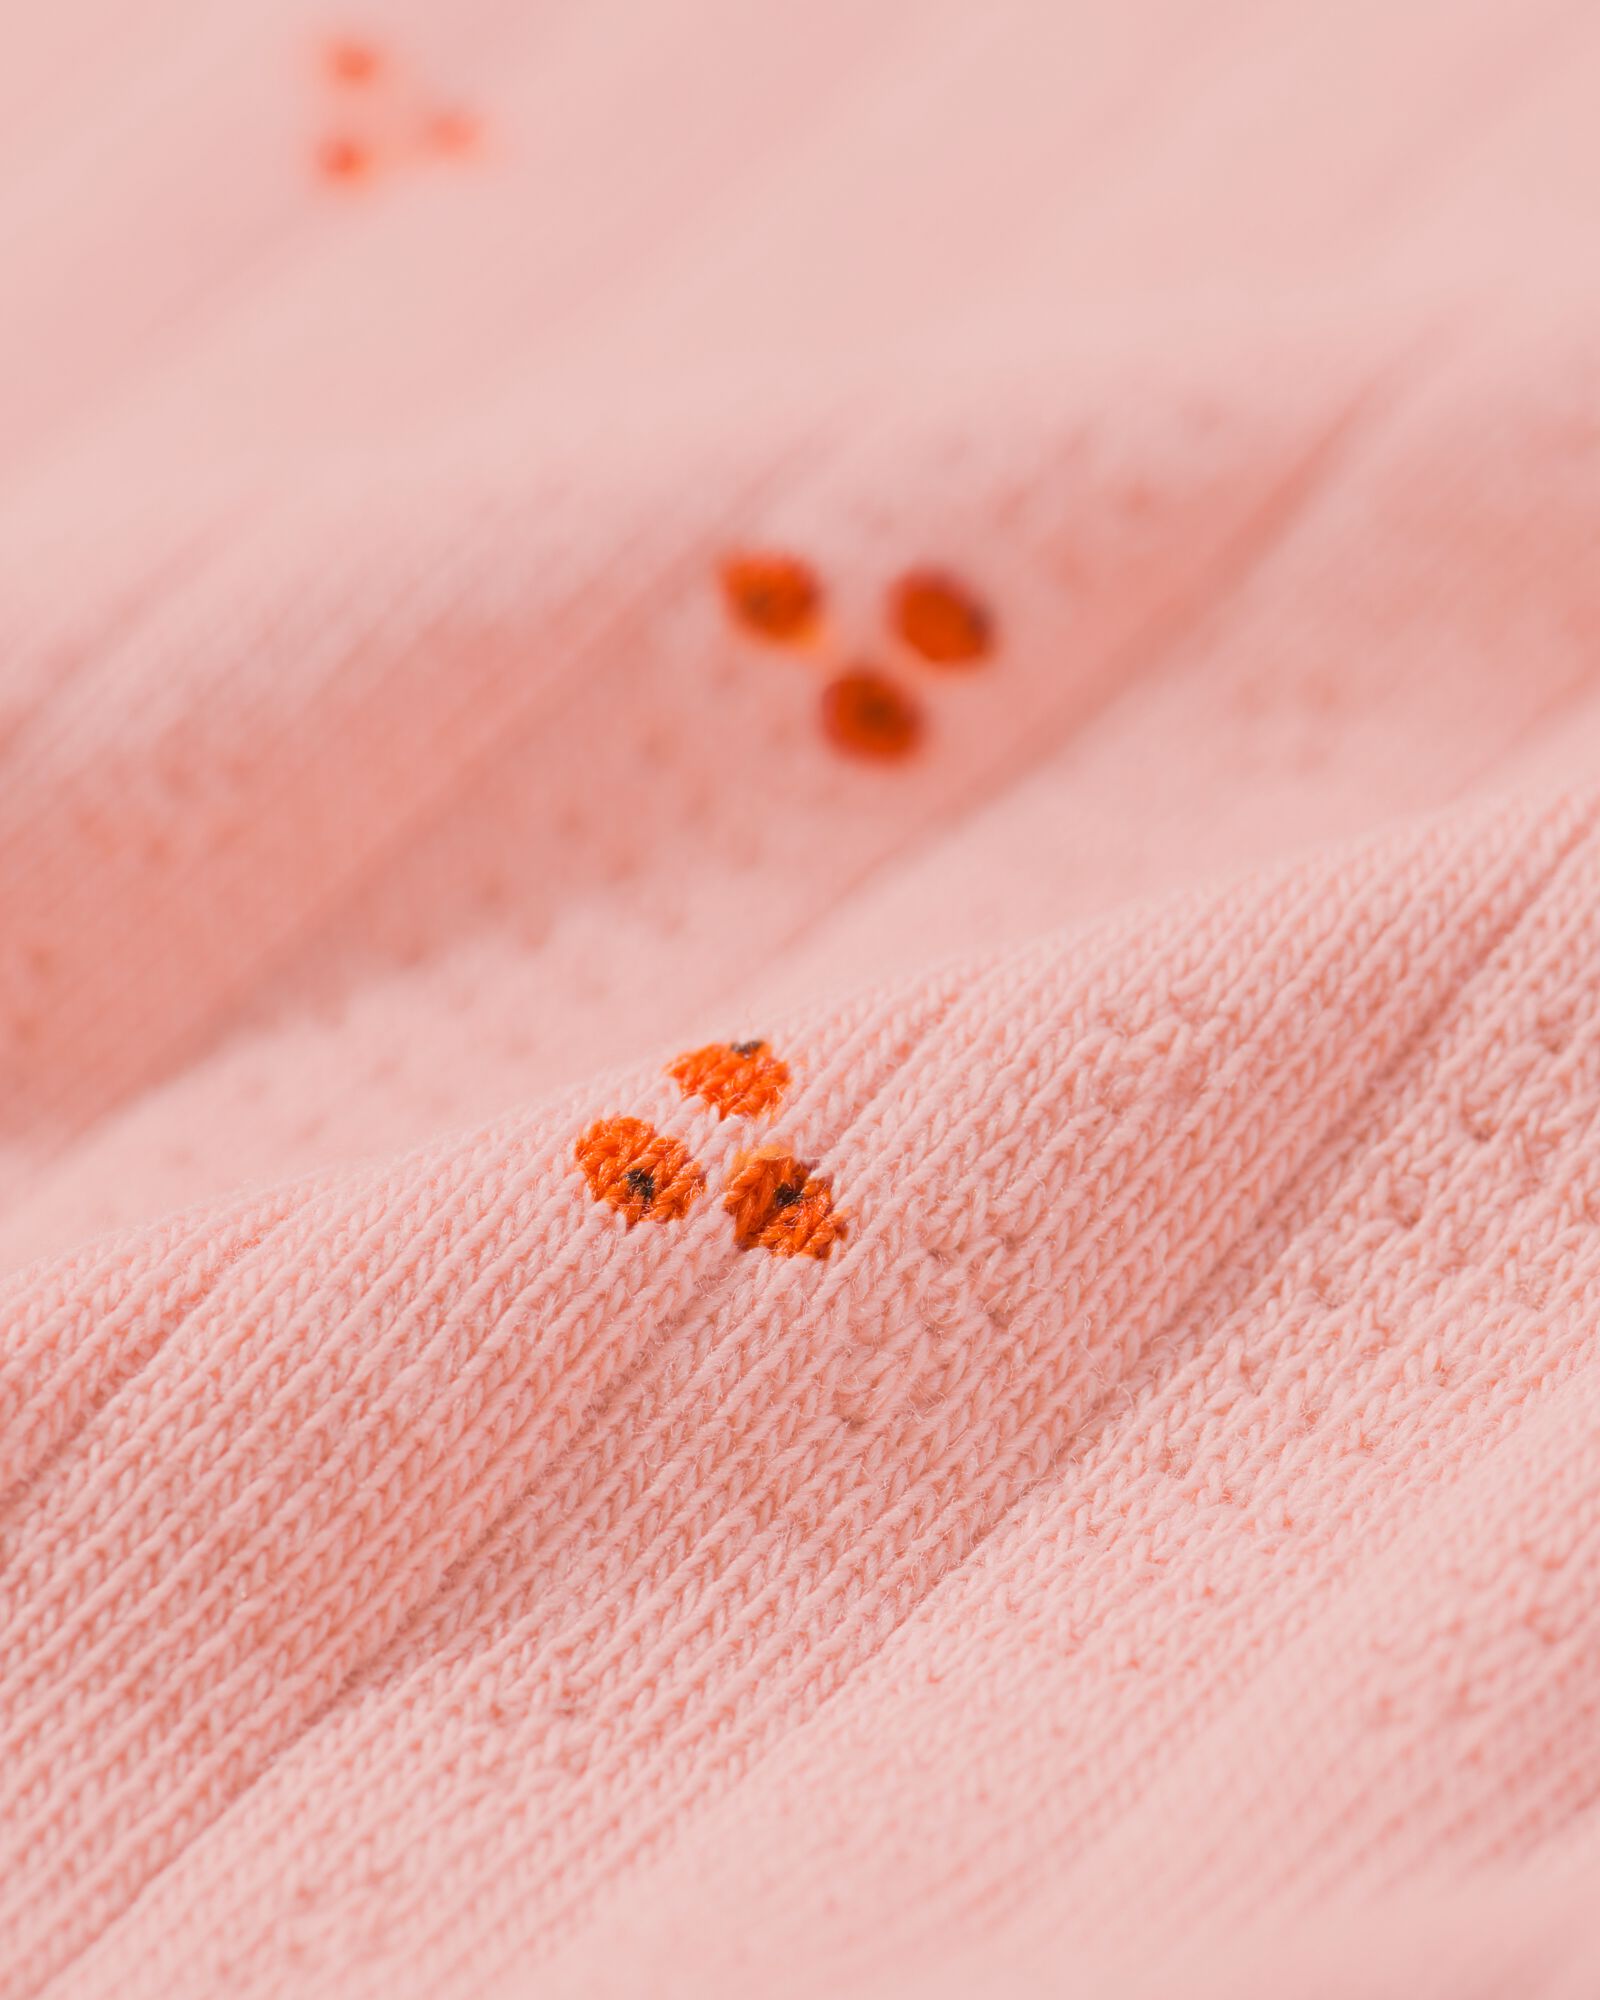 newborn shirt ajour roze roze - 1000032592 - HEMA